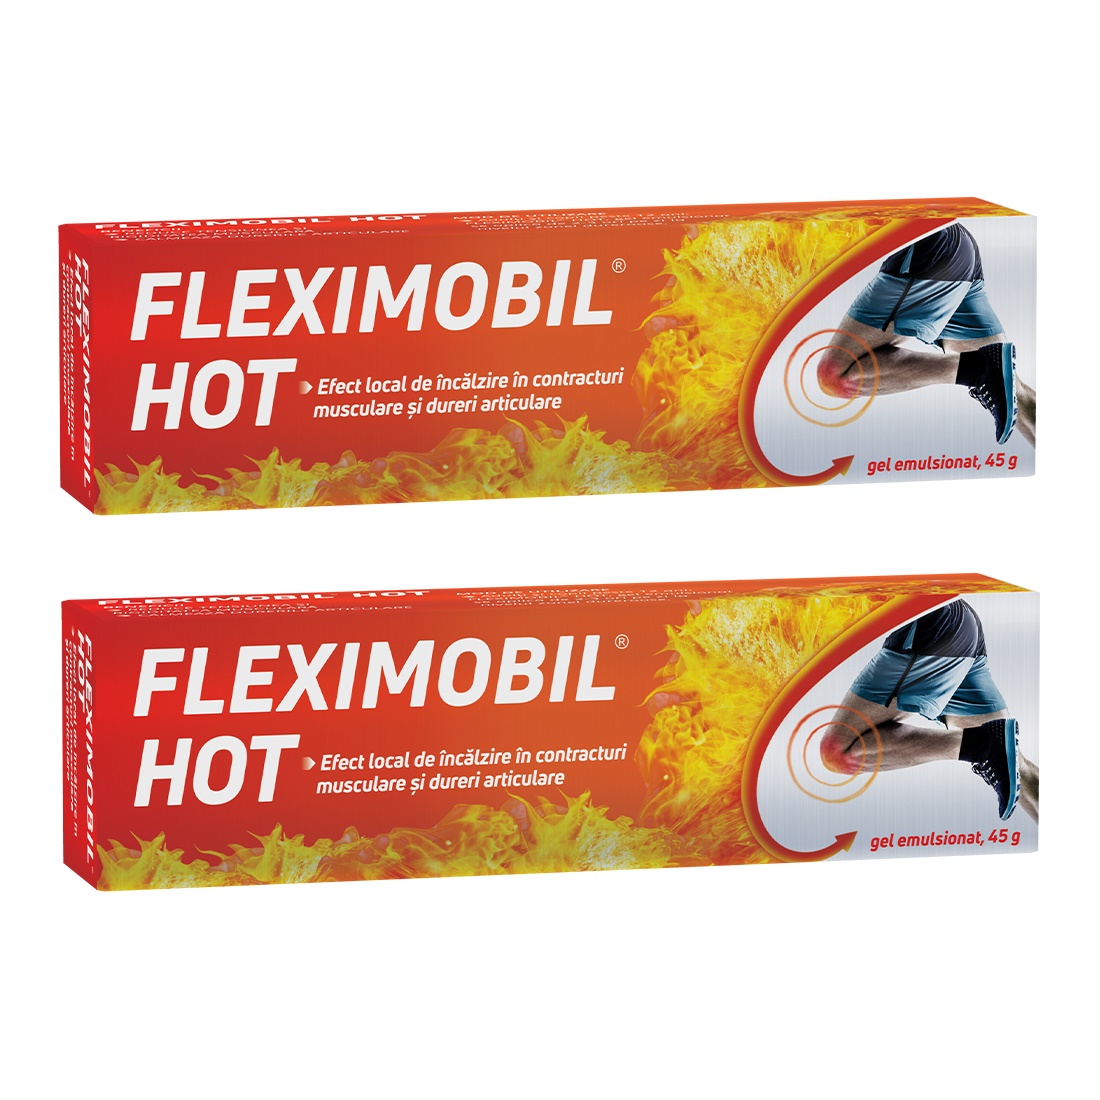 Fleximobil, 10 plicuri, Fiterman Pharma